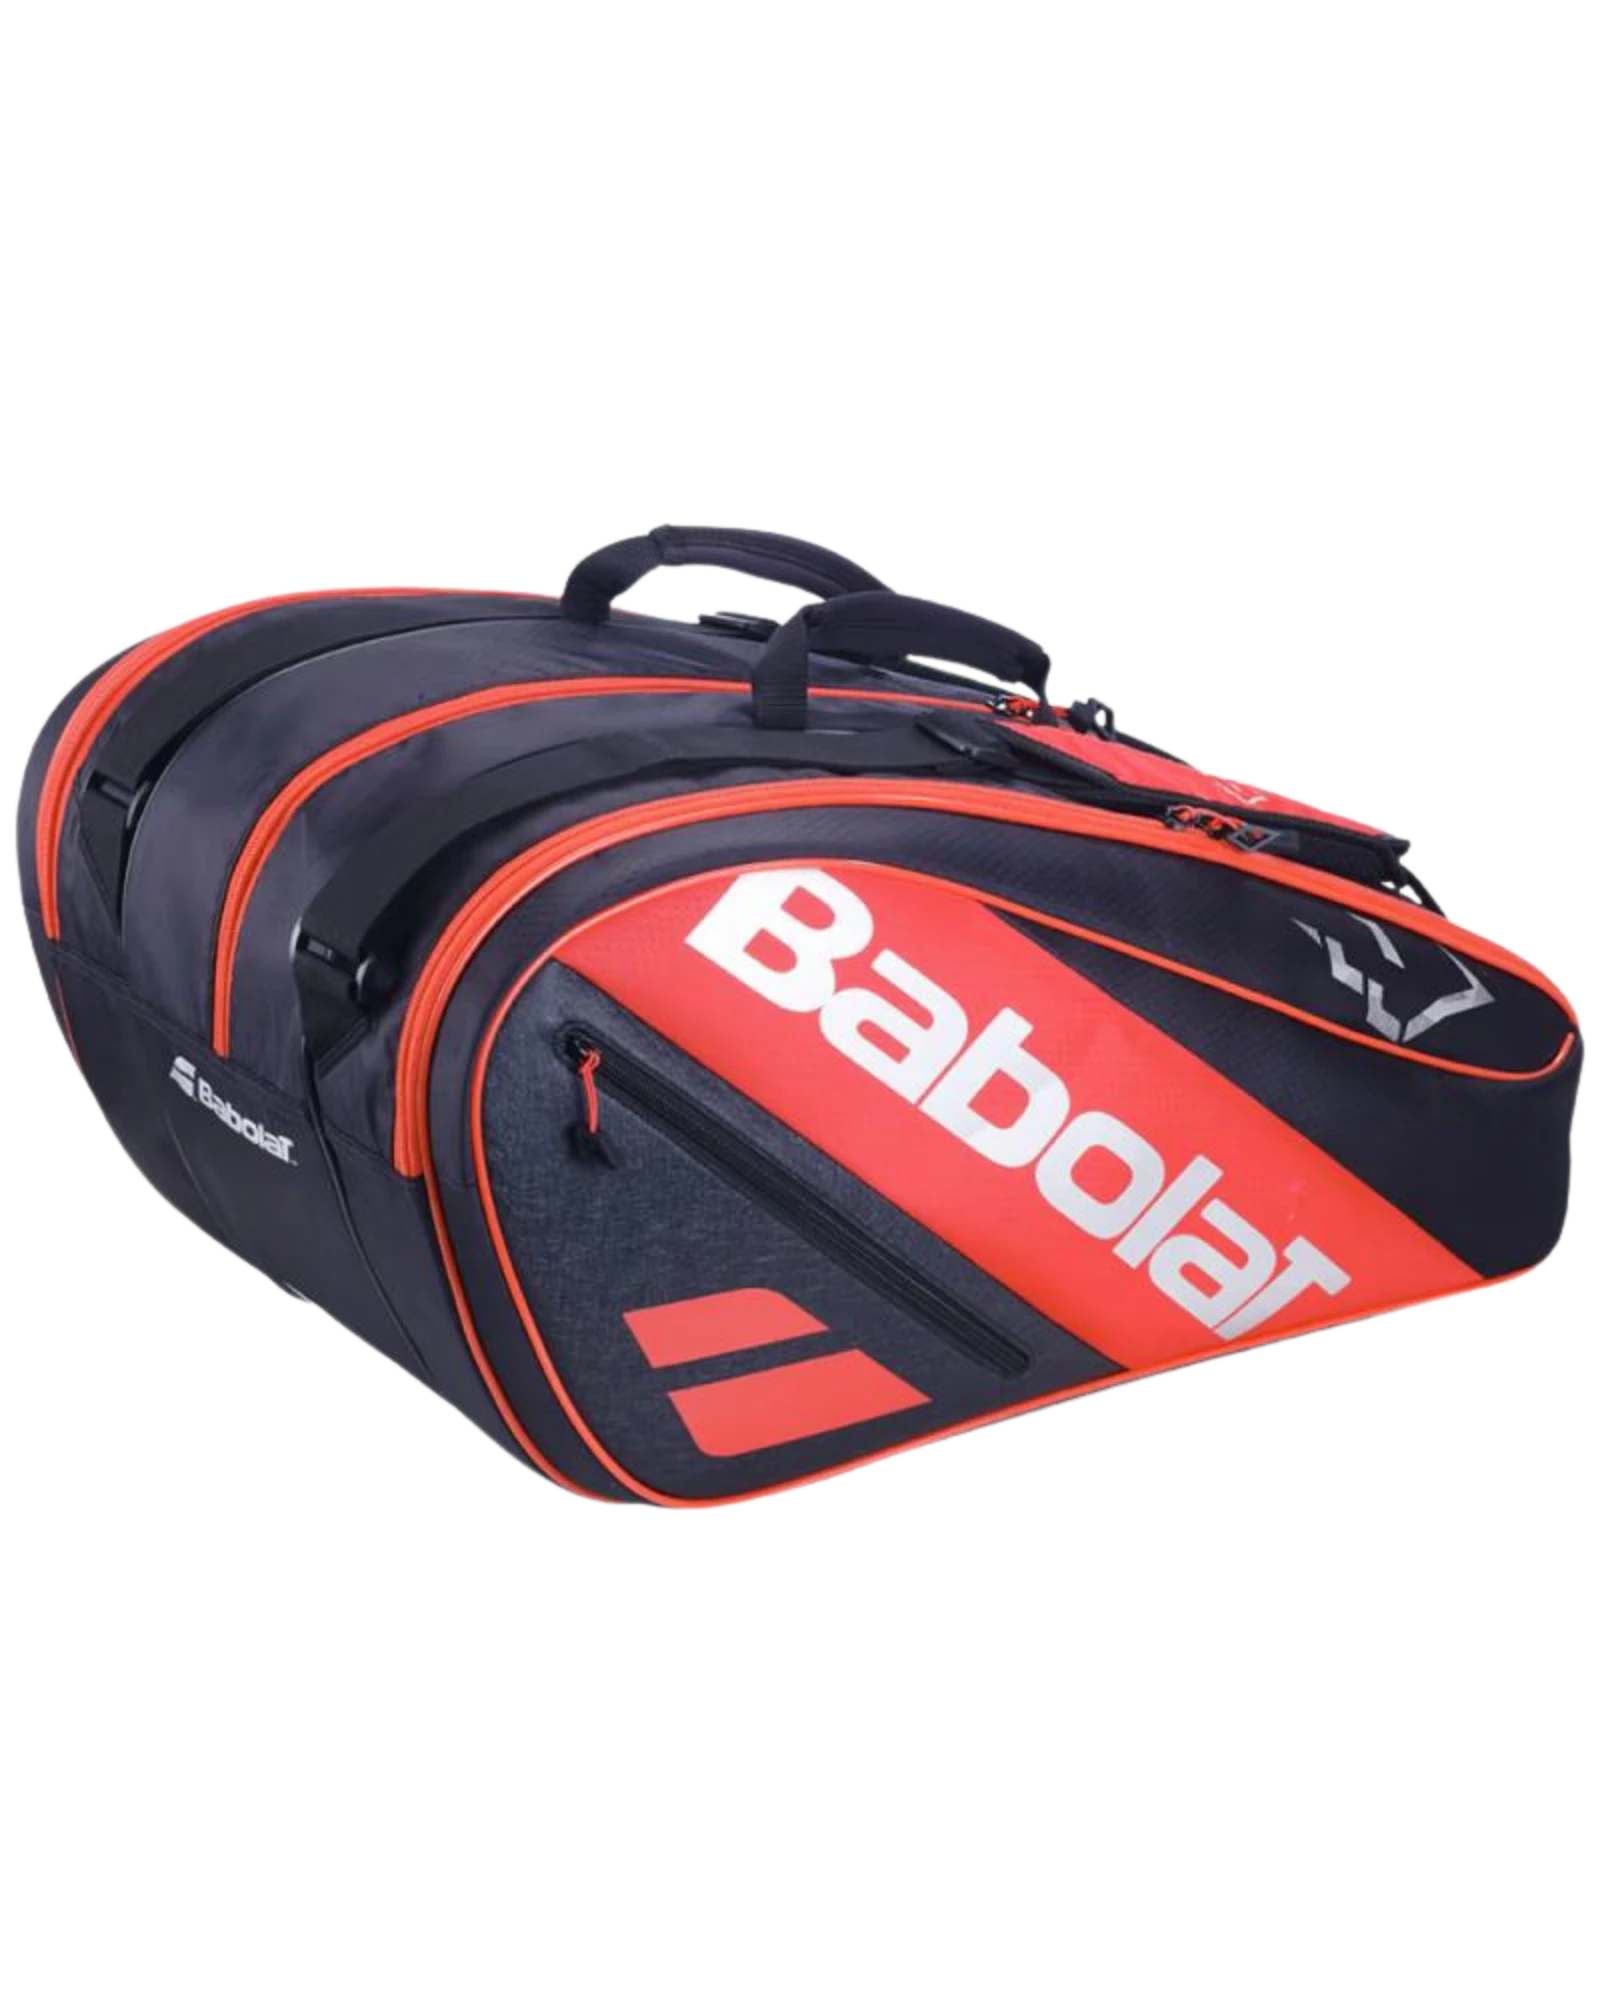 The Babolat  RH Juan Lebron Padel Bag